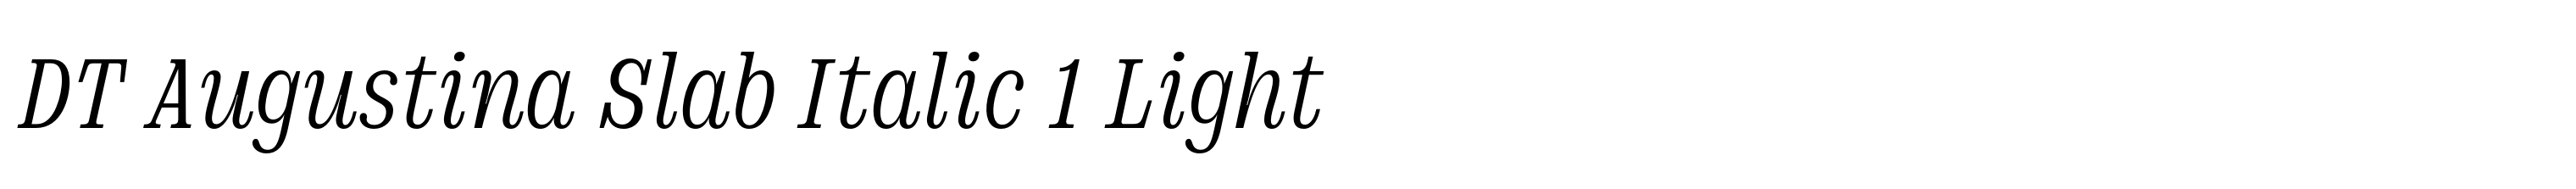 DT Augustina Slab Italic 1 Light